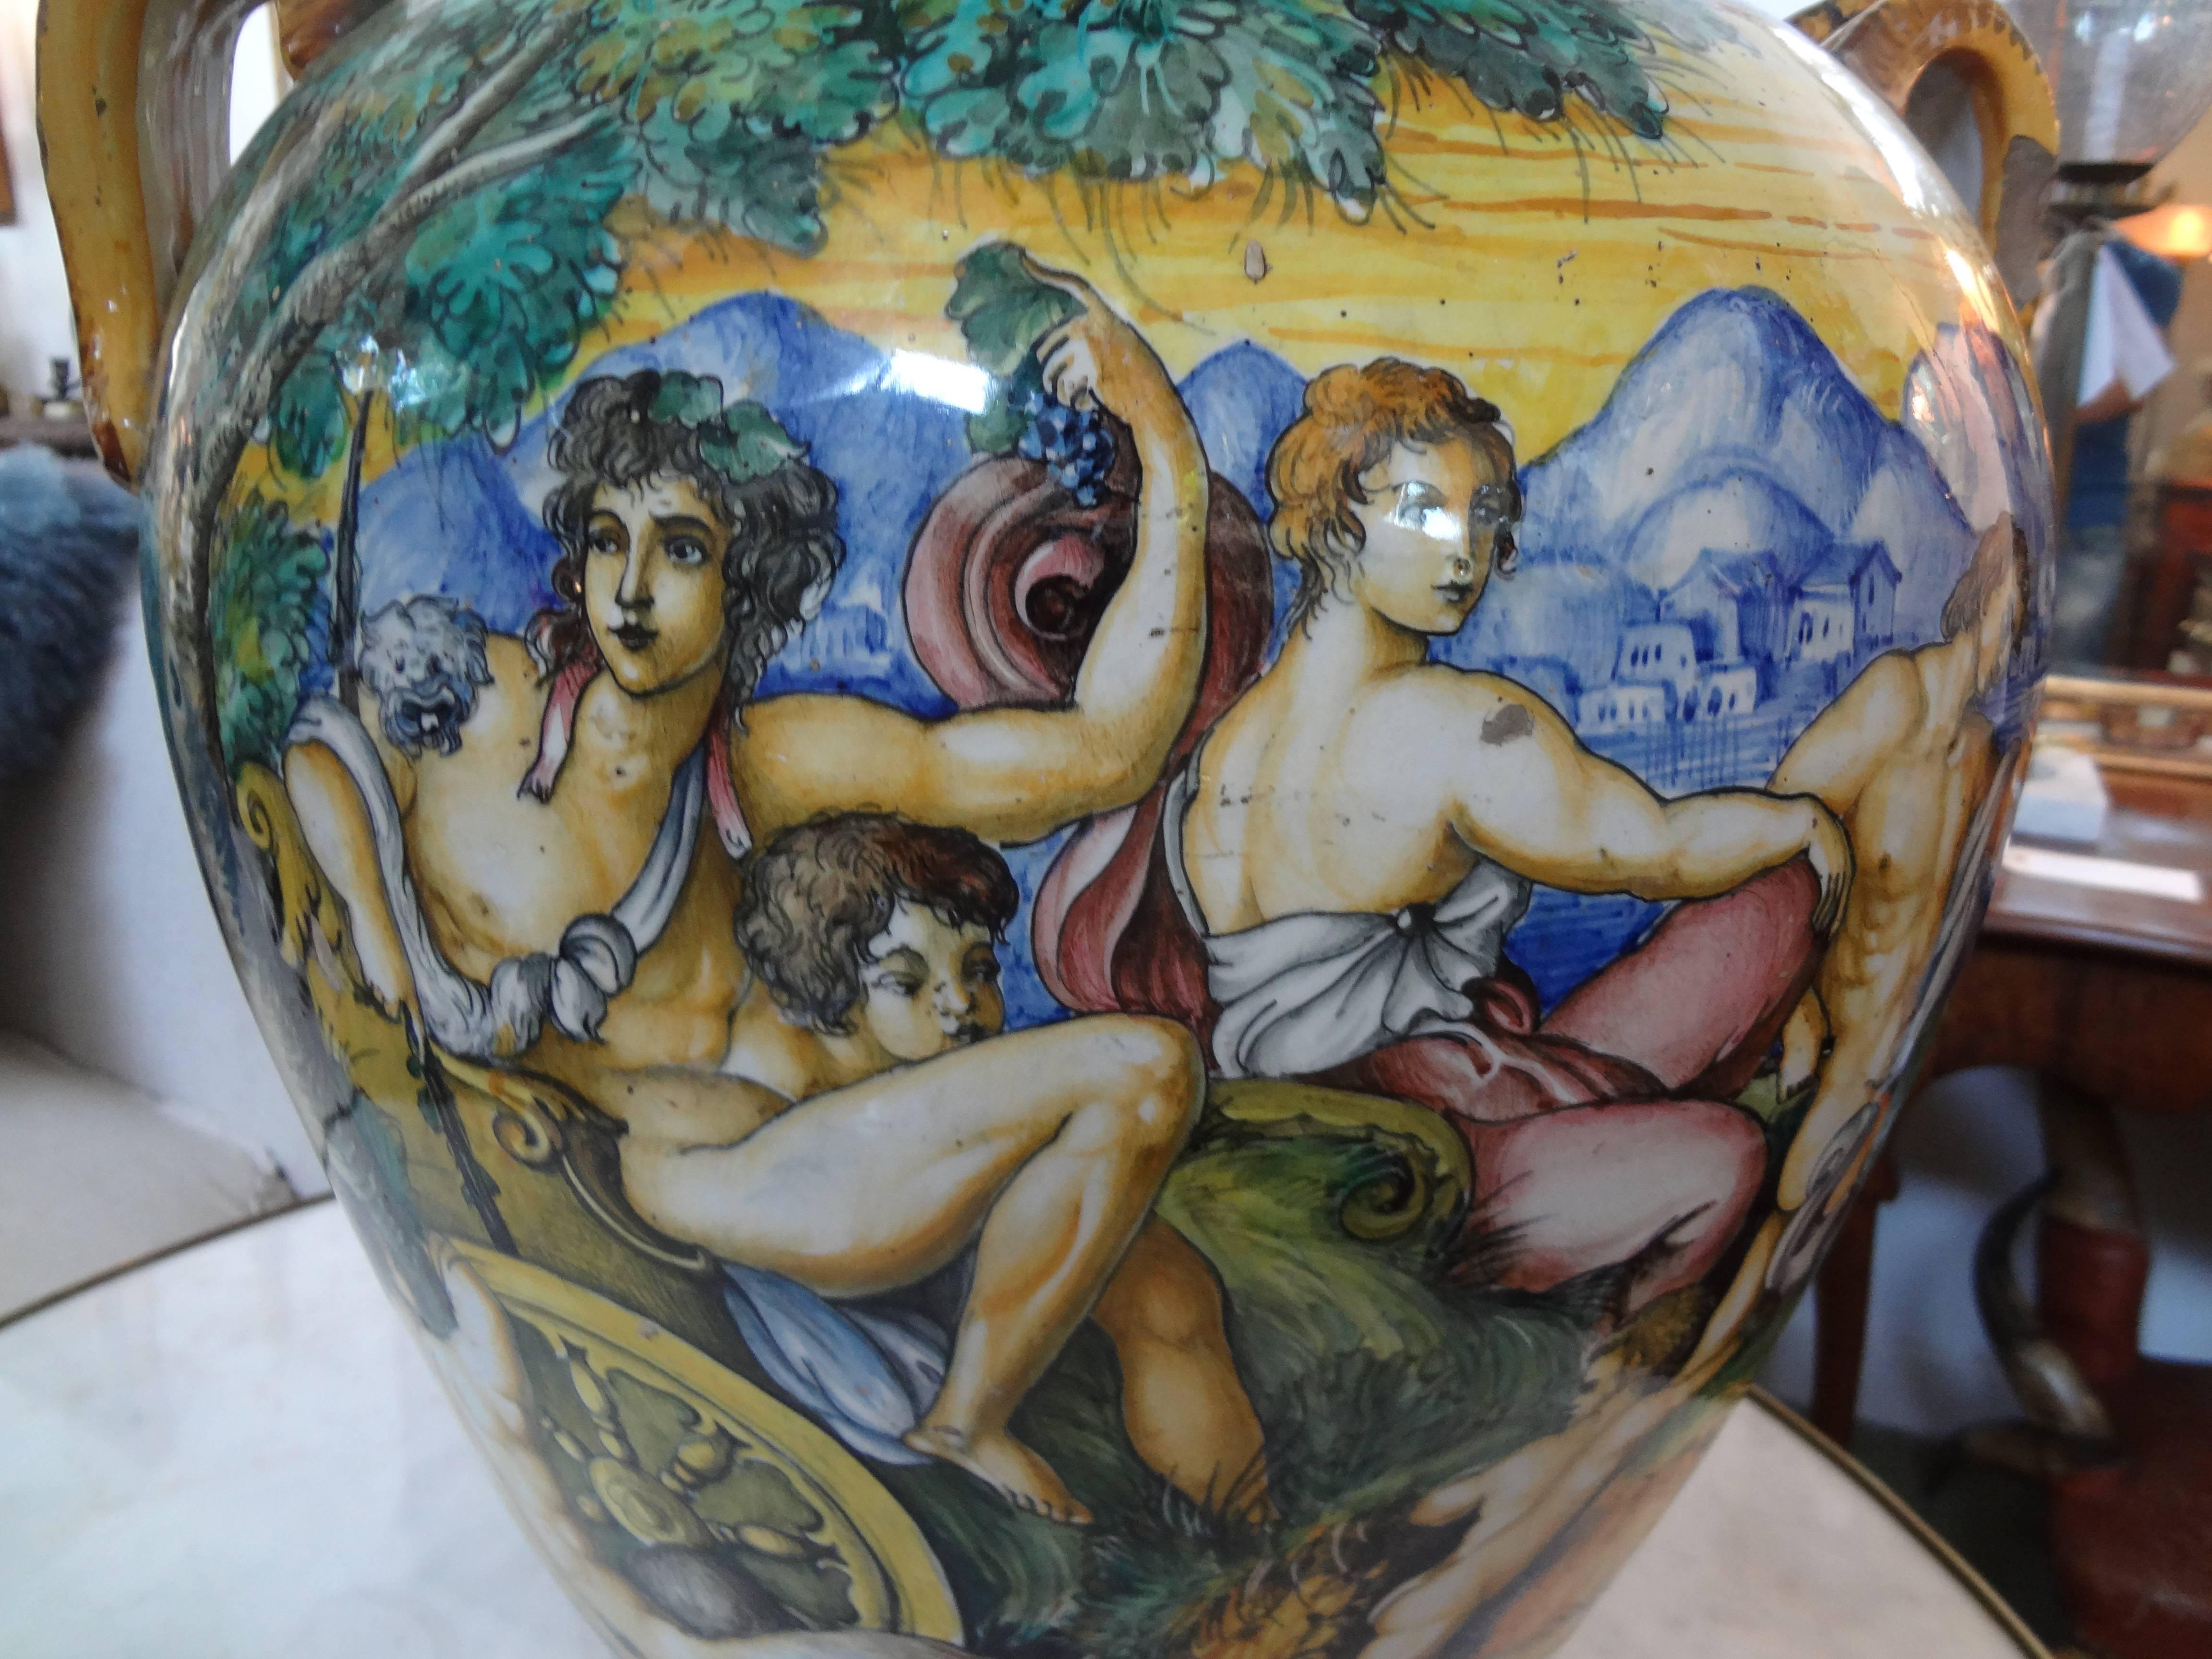 Renaissance 19th Century Italian Glazed Earthenware Urn Attributed to Urbino Workshop